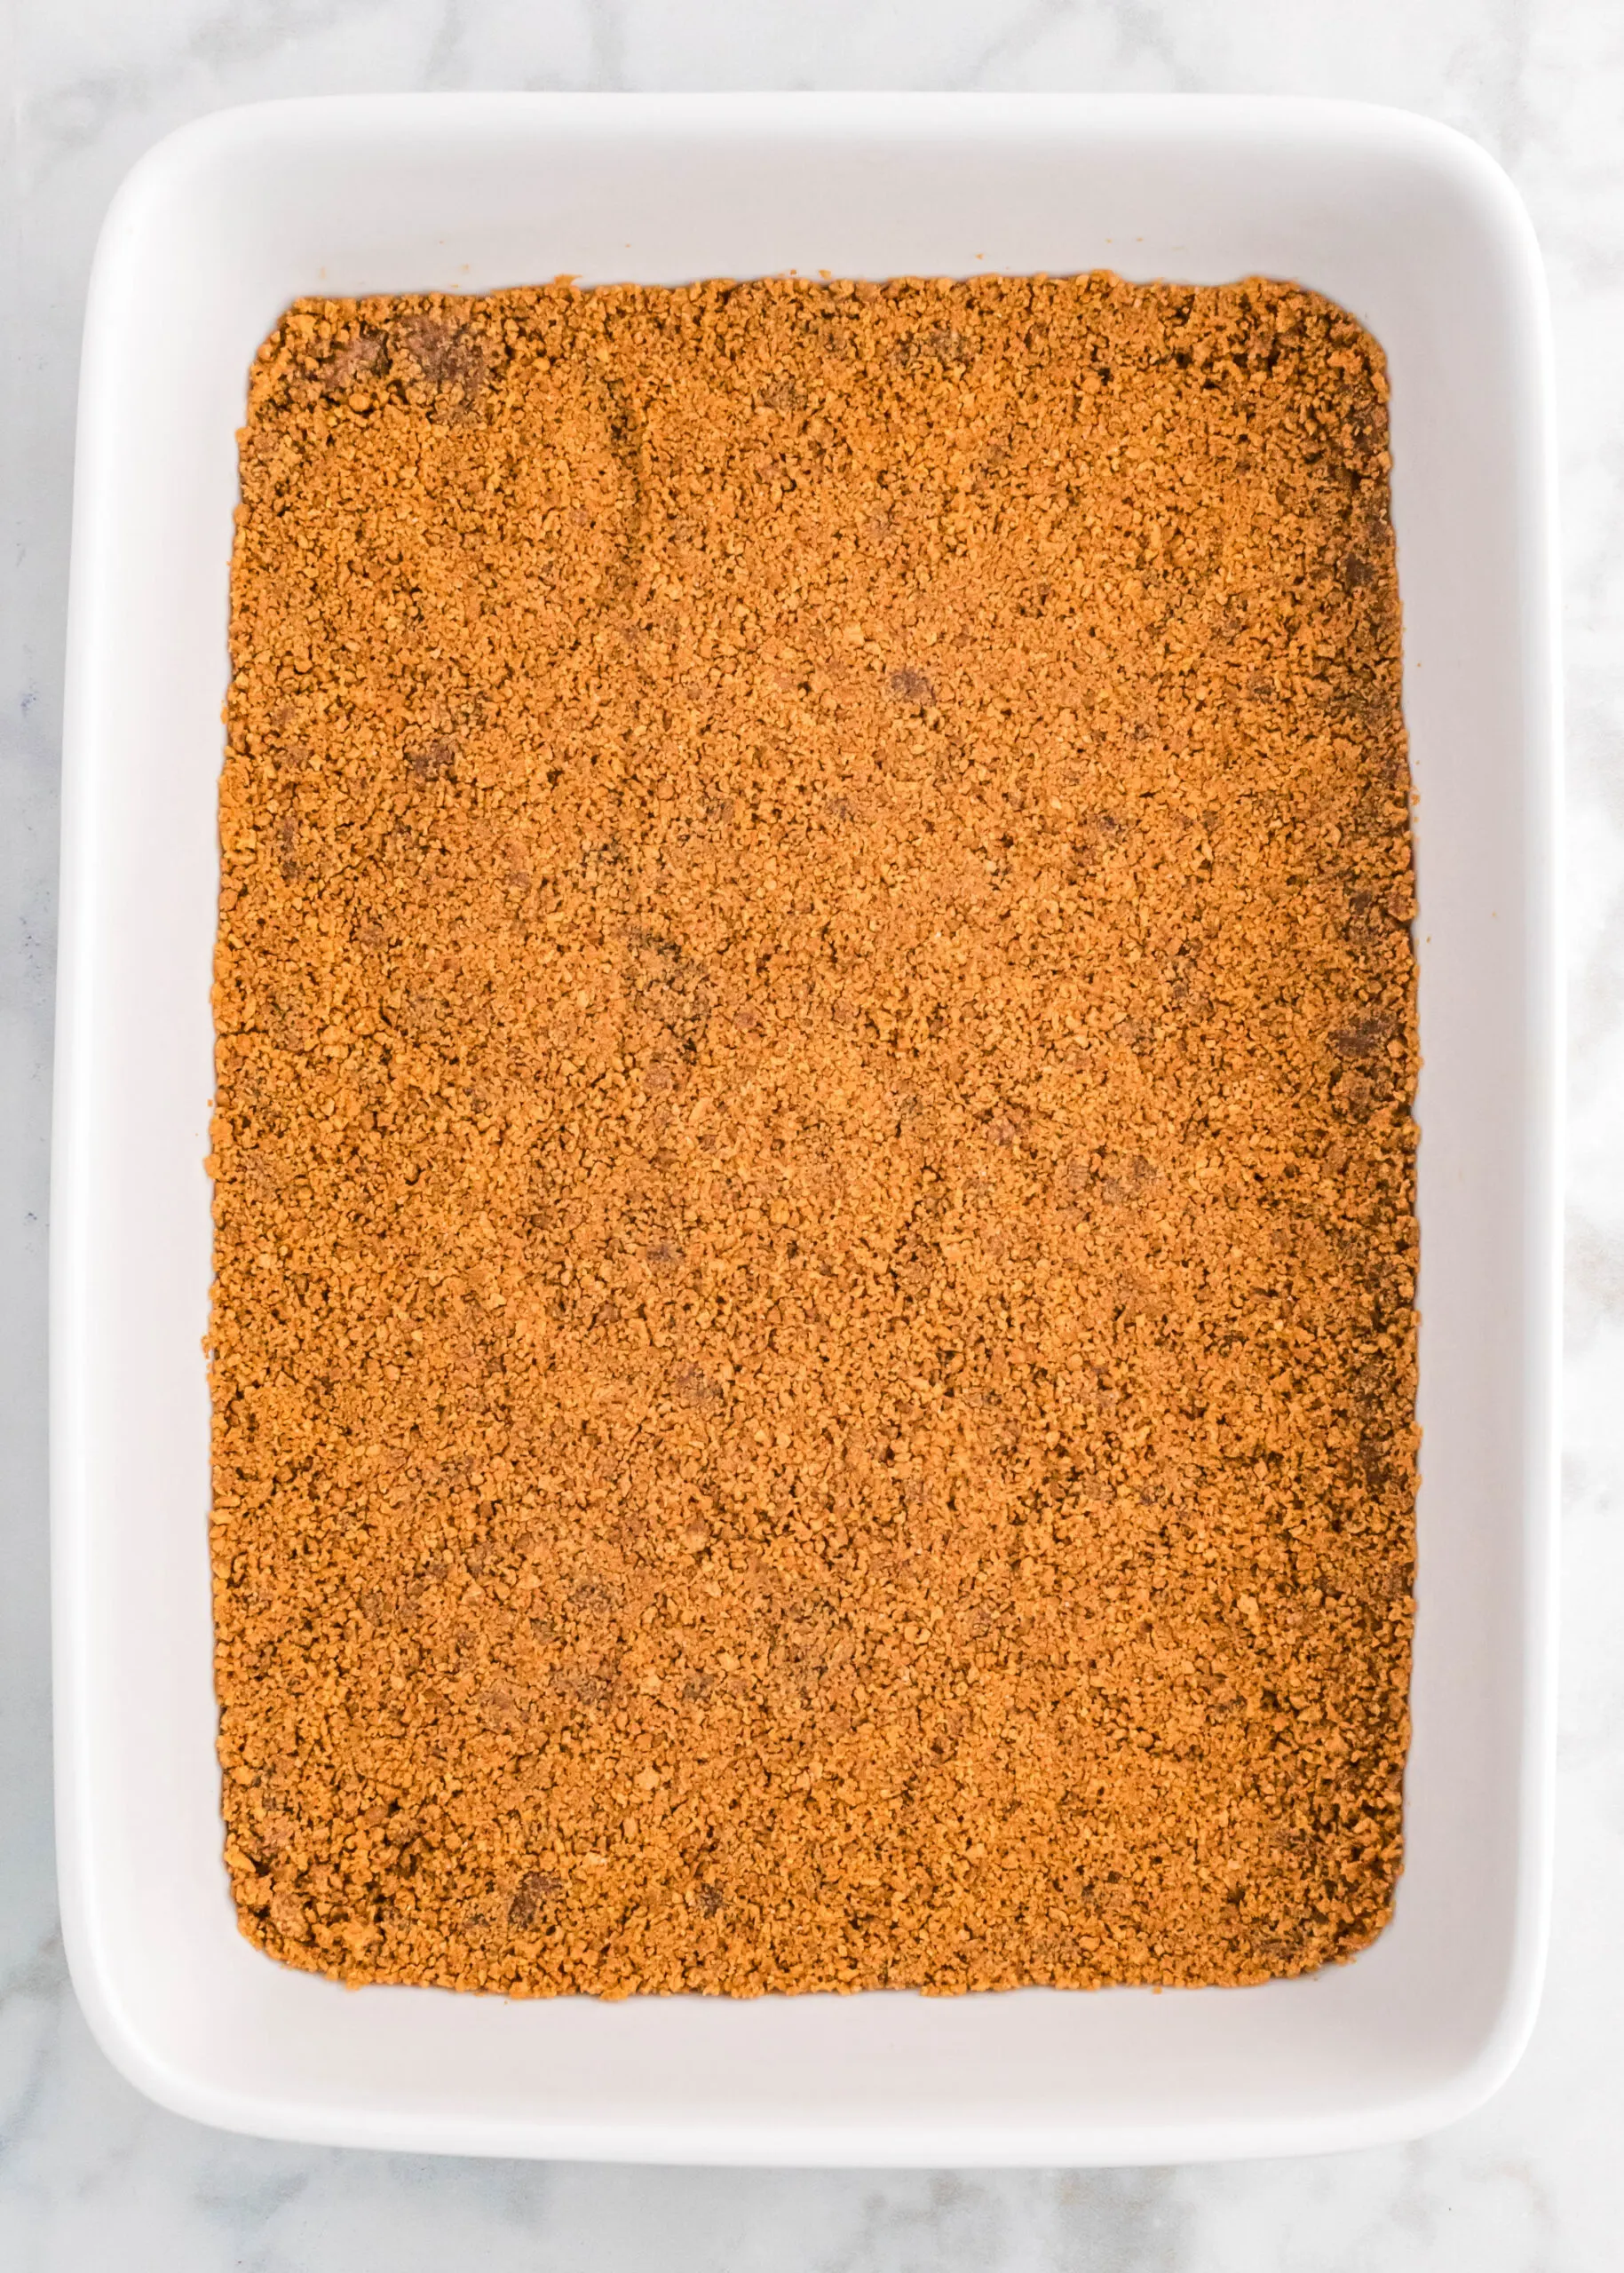 gingersnap crust in a baking pan